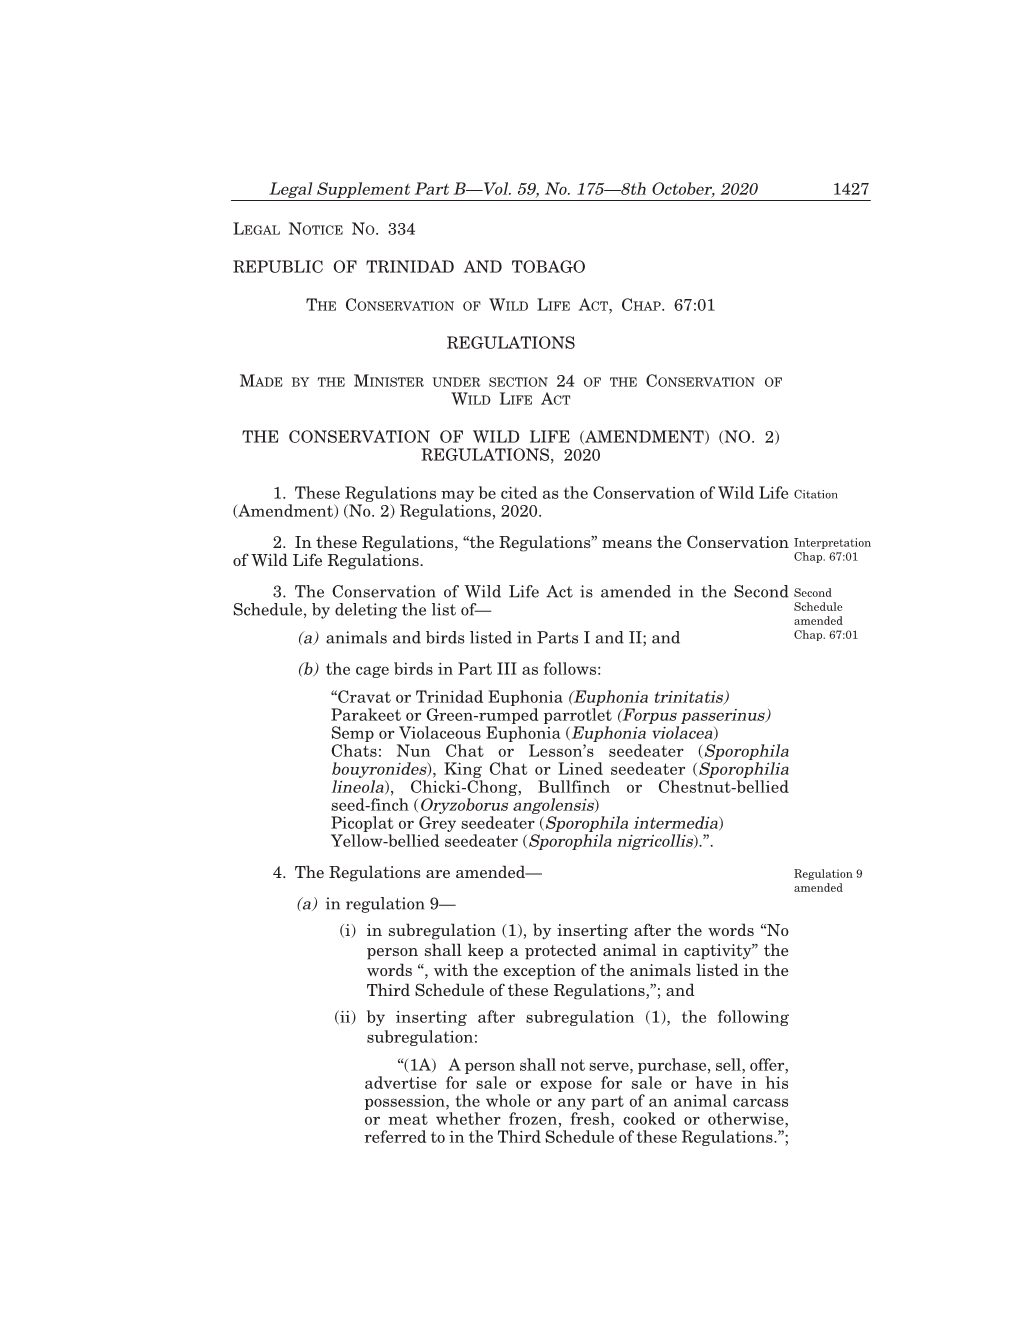 Legal Notice No. 334, Vol. 59, No. 175, 8Th October, 2020